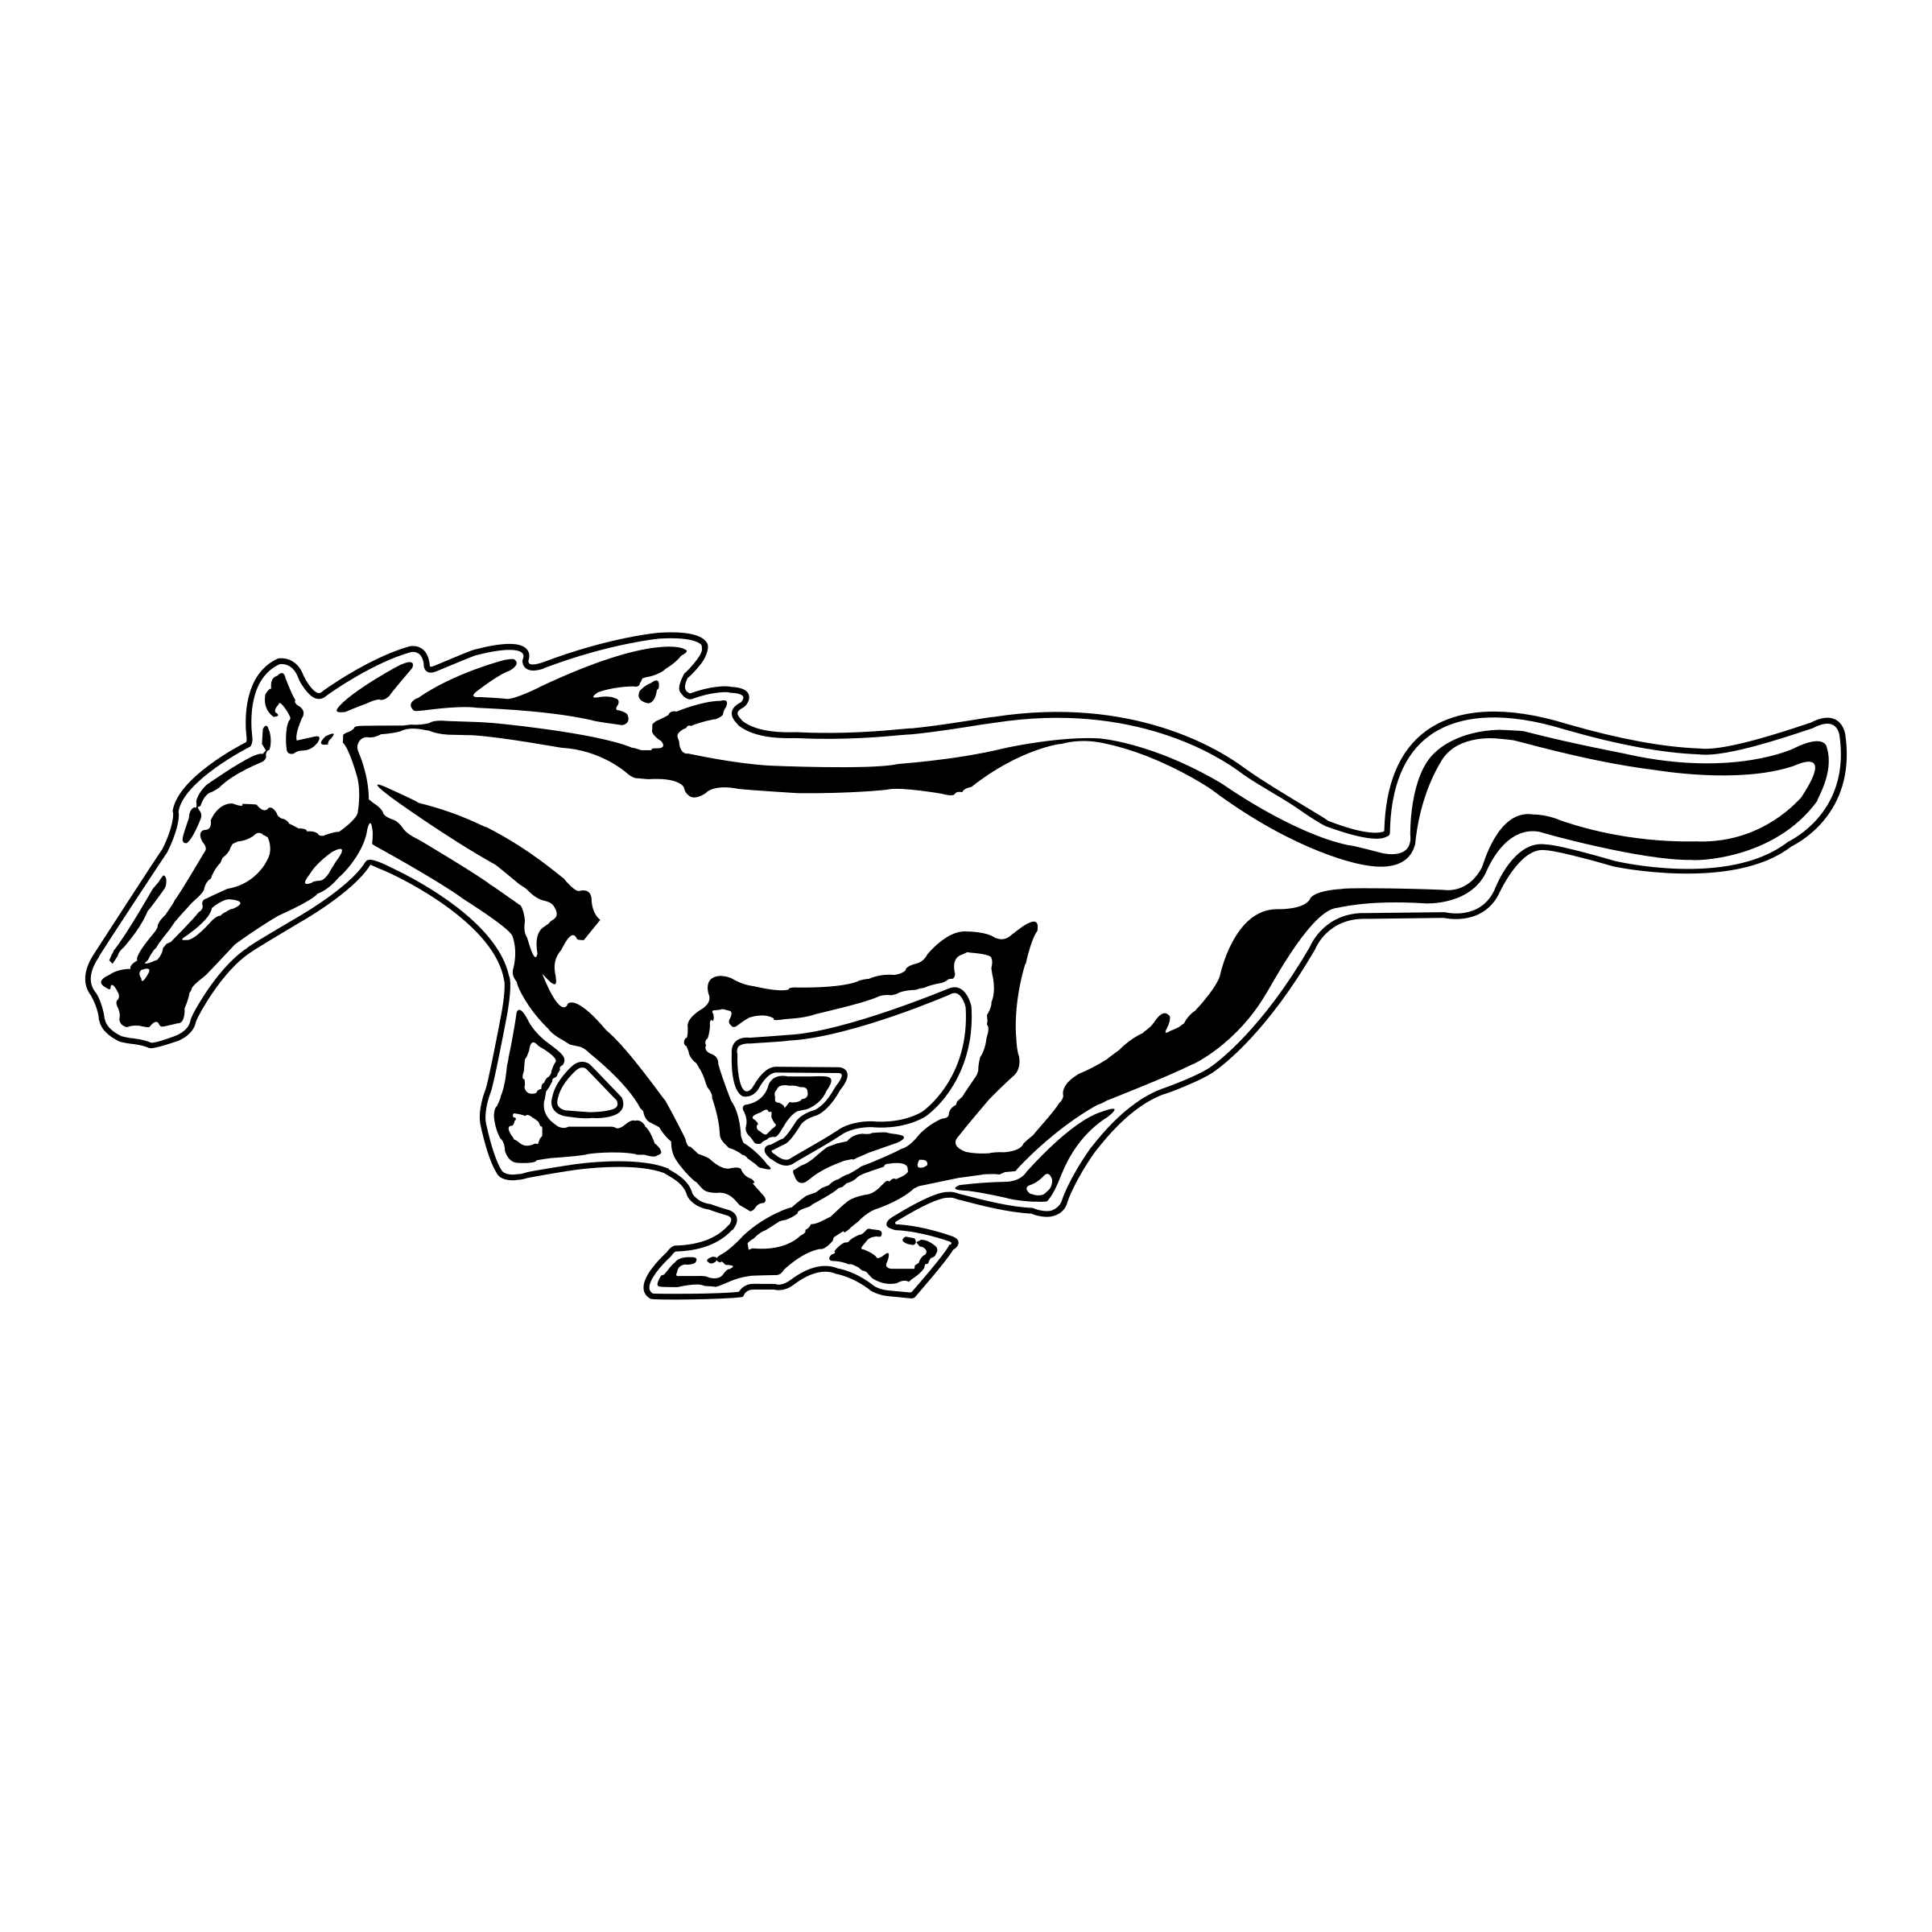 Mustang Logo Png Transparent & Svg Vector - Pluspng Pluspng, Mustang Logo PNG - Free PNG